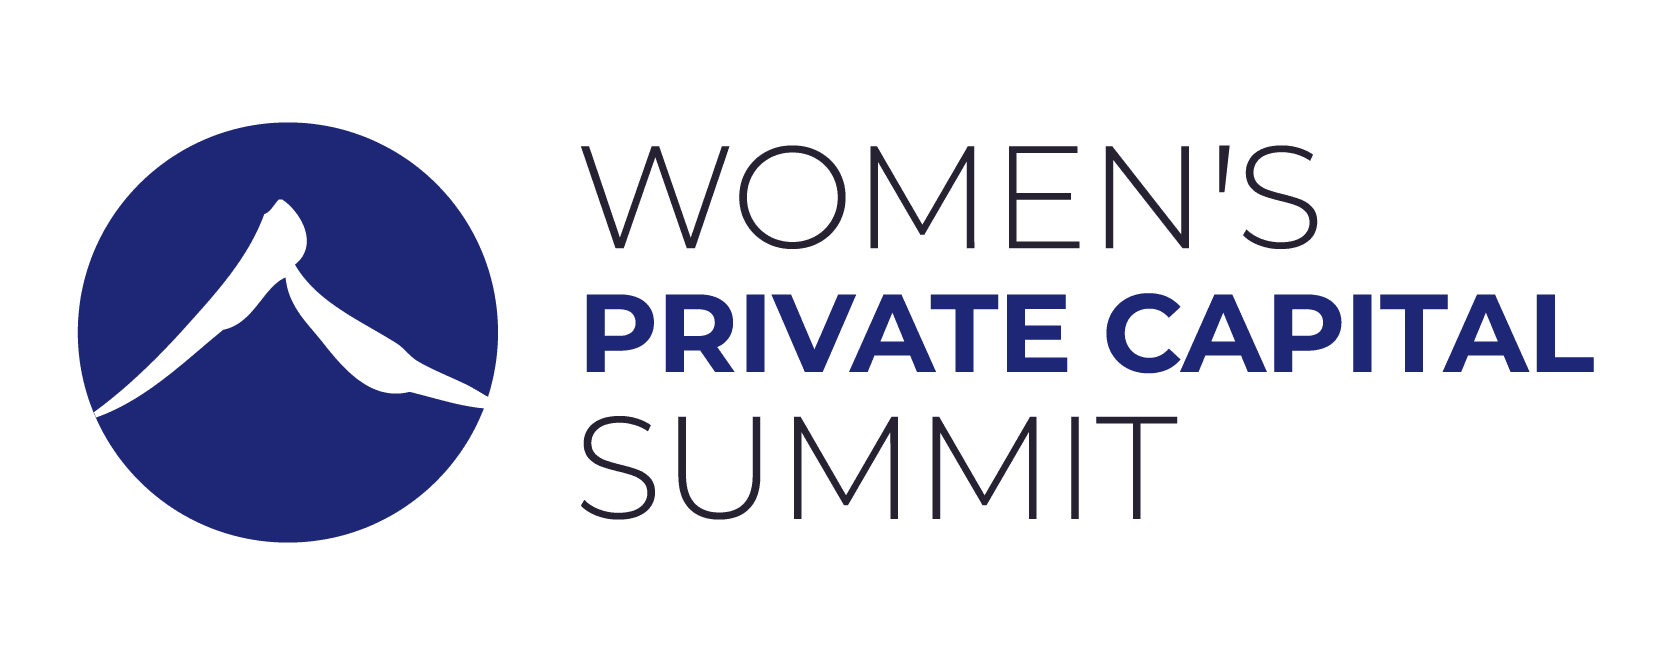 Women's Private Capital Summit Logo